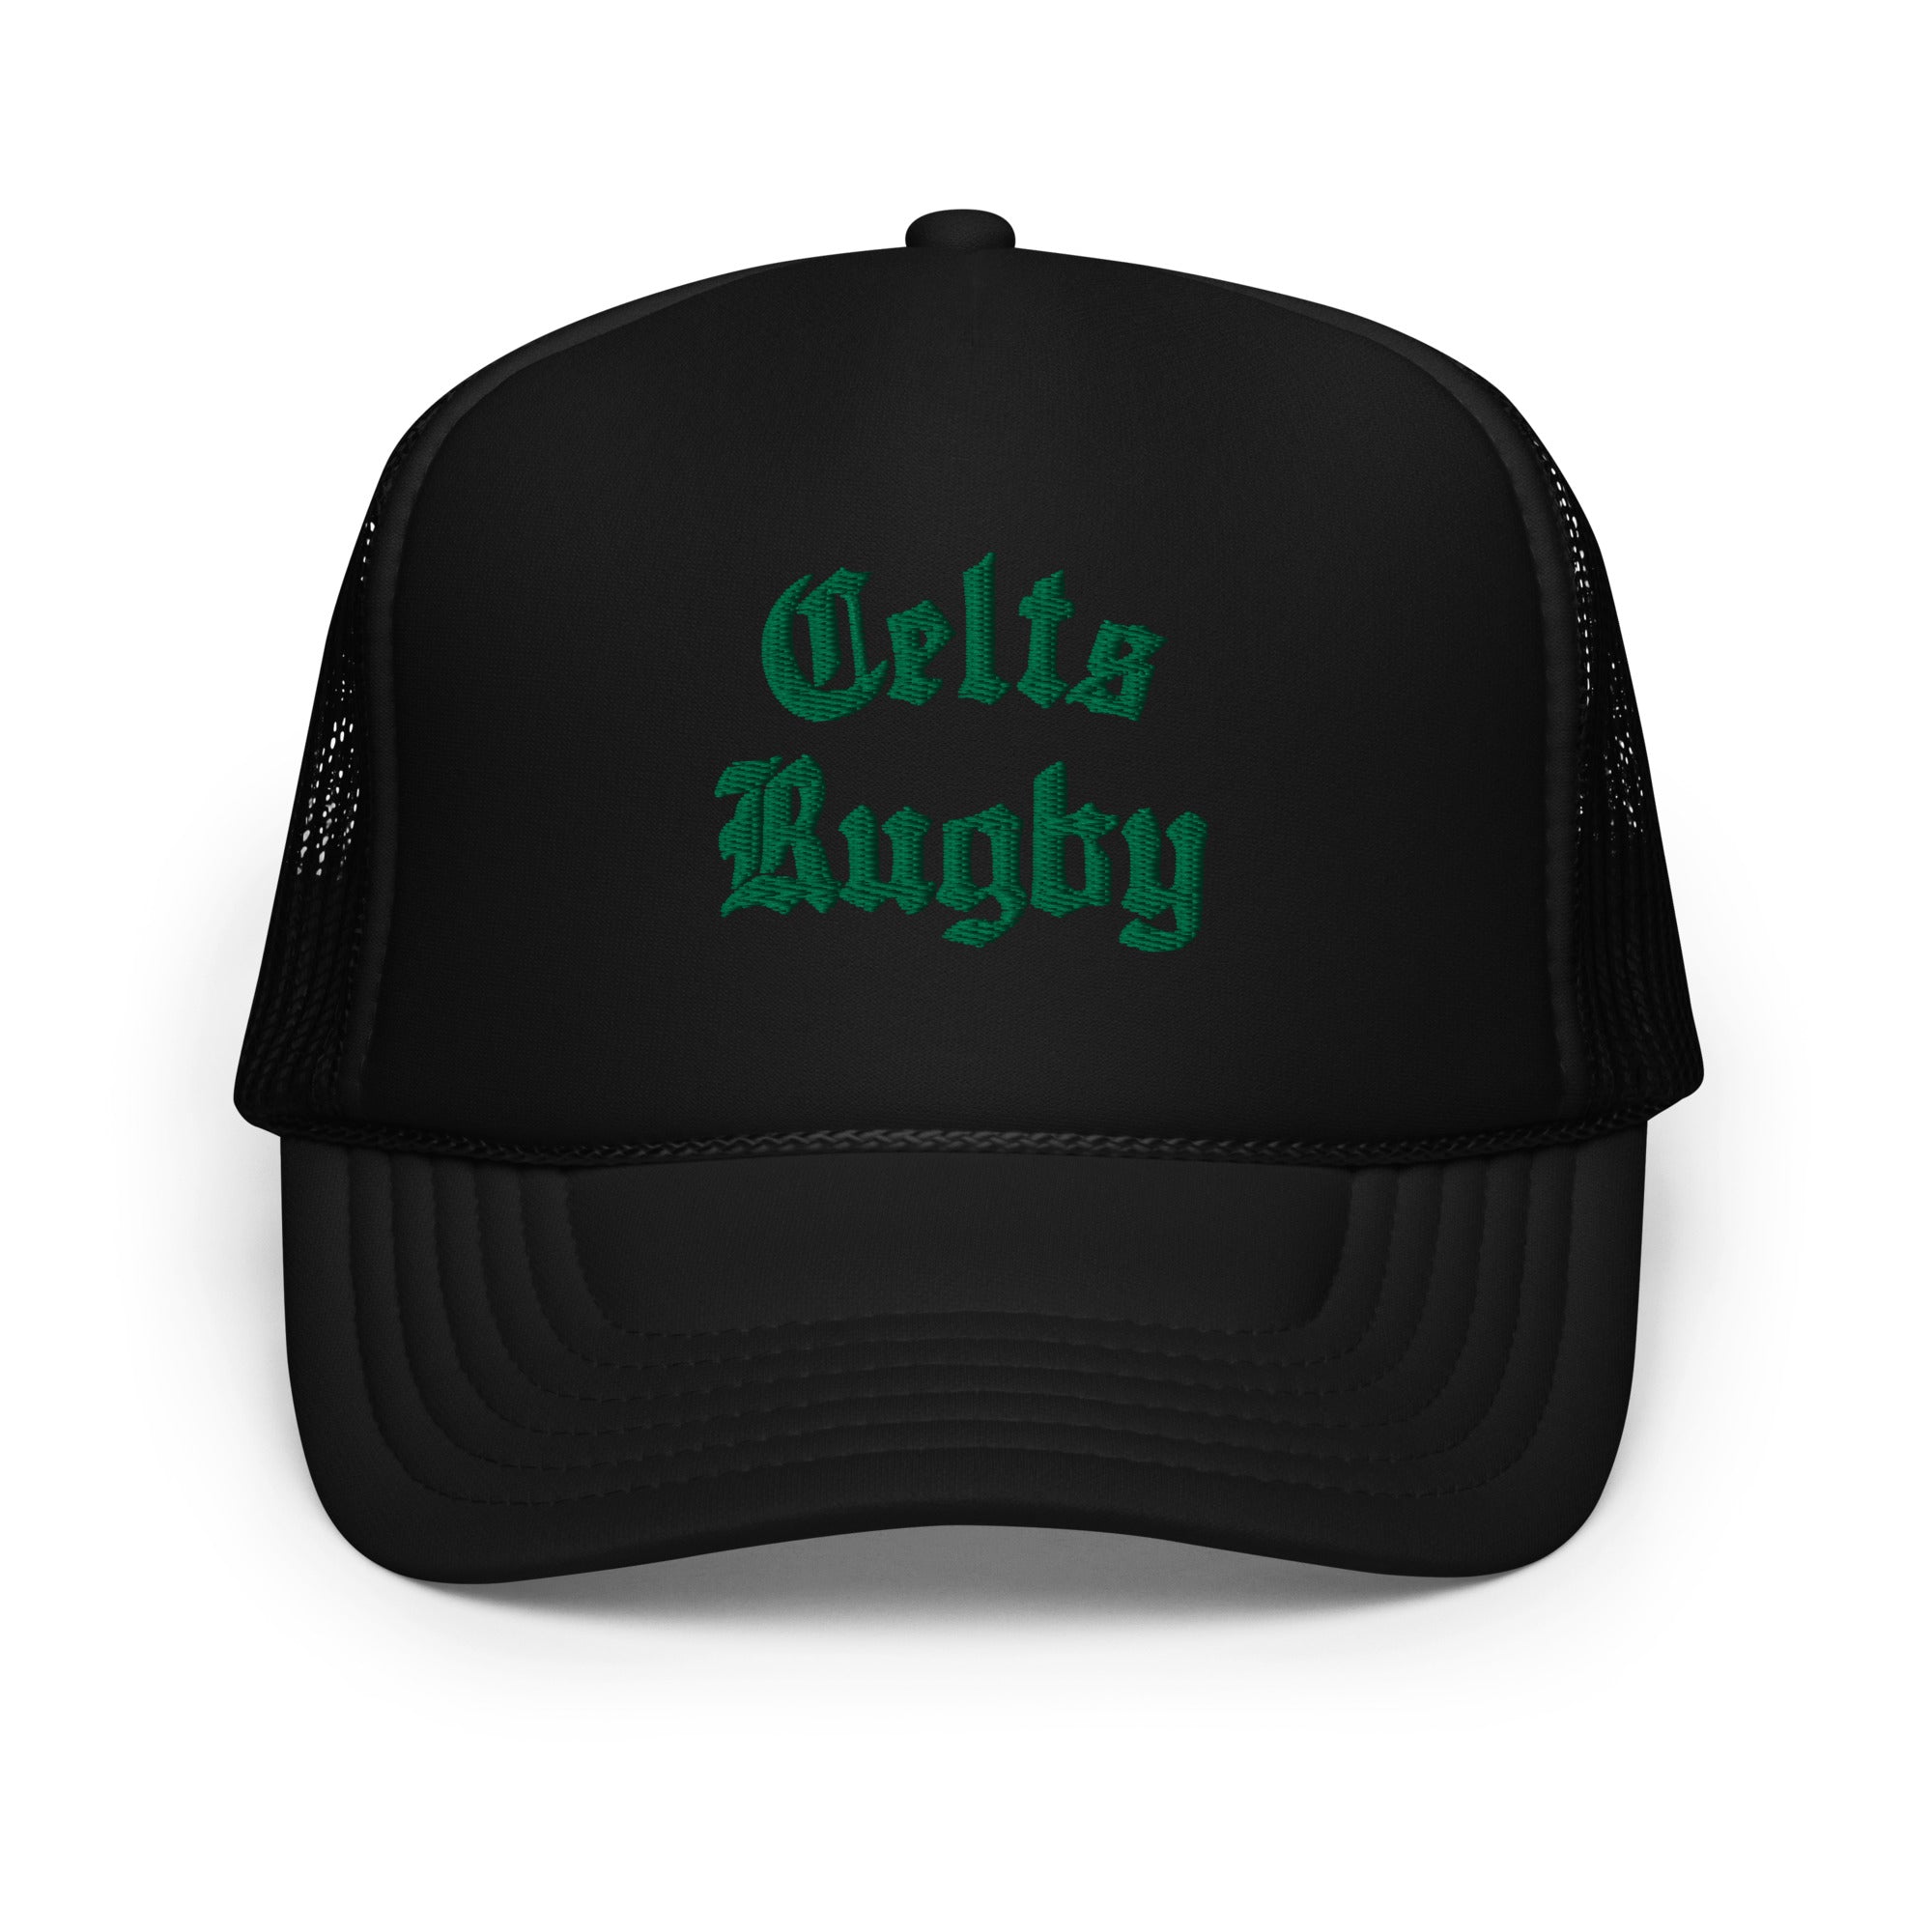 Rugby Imports Springfield Celts Foam Trucker Hat